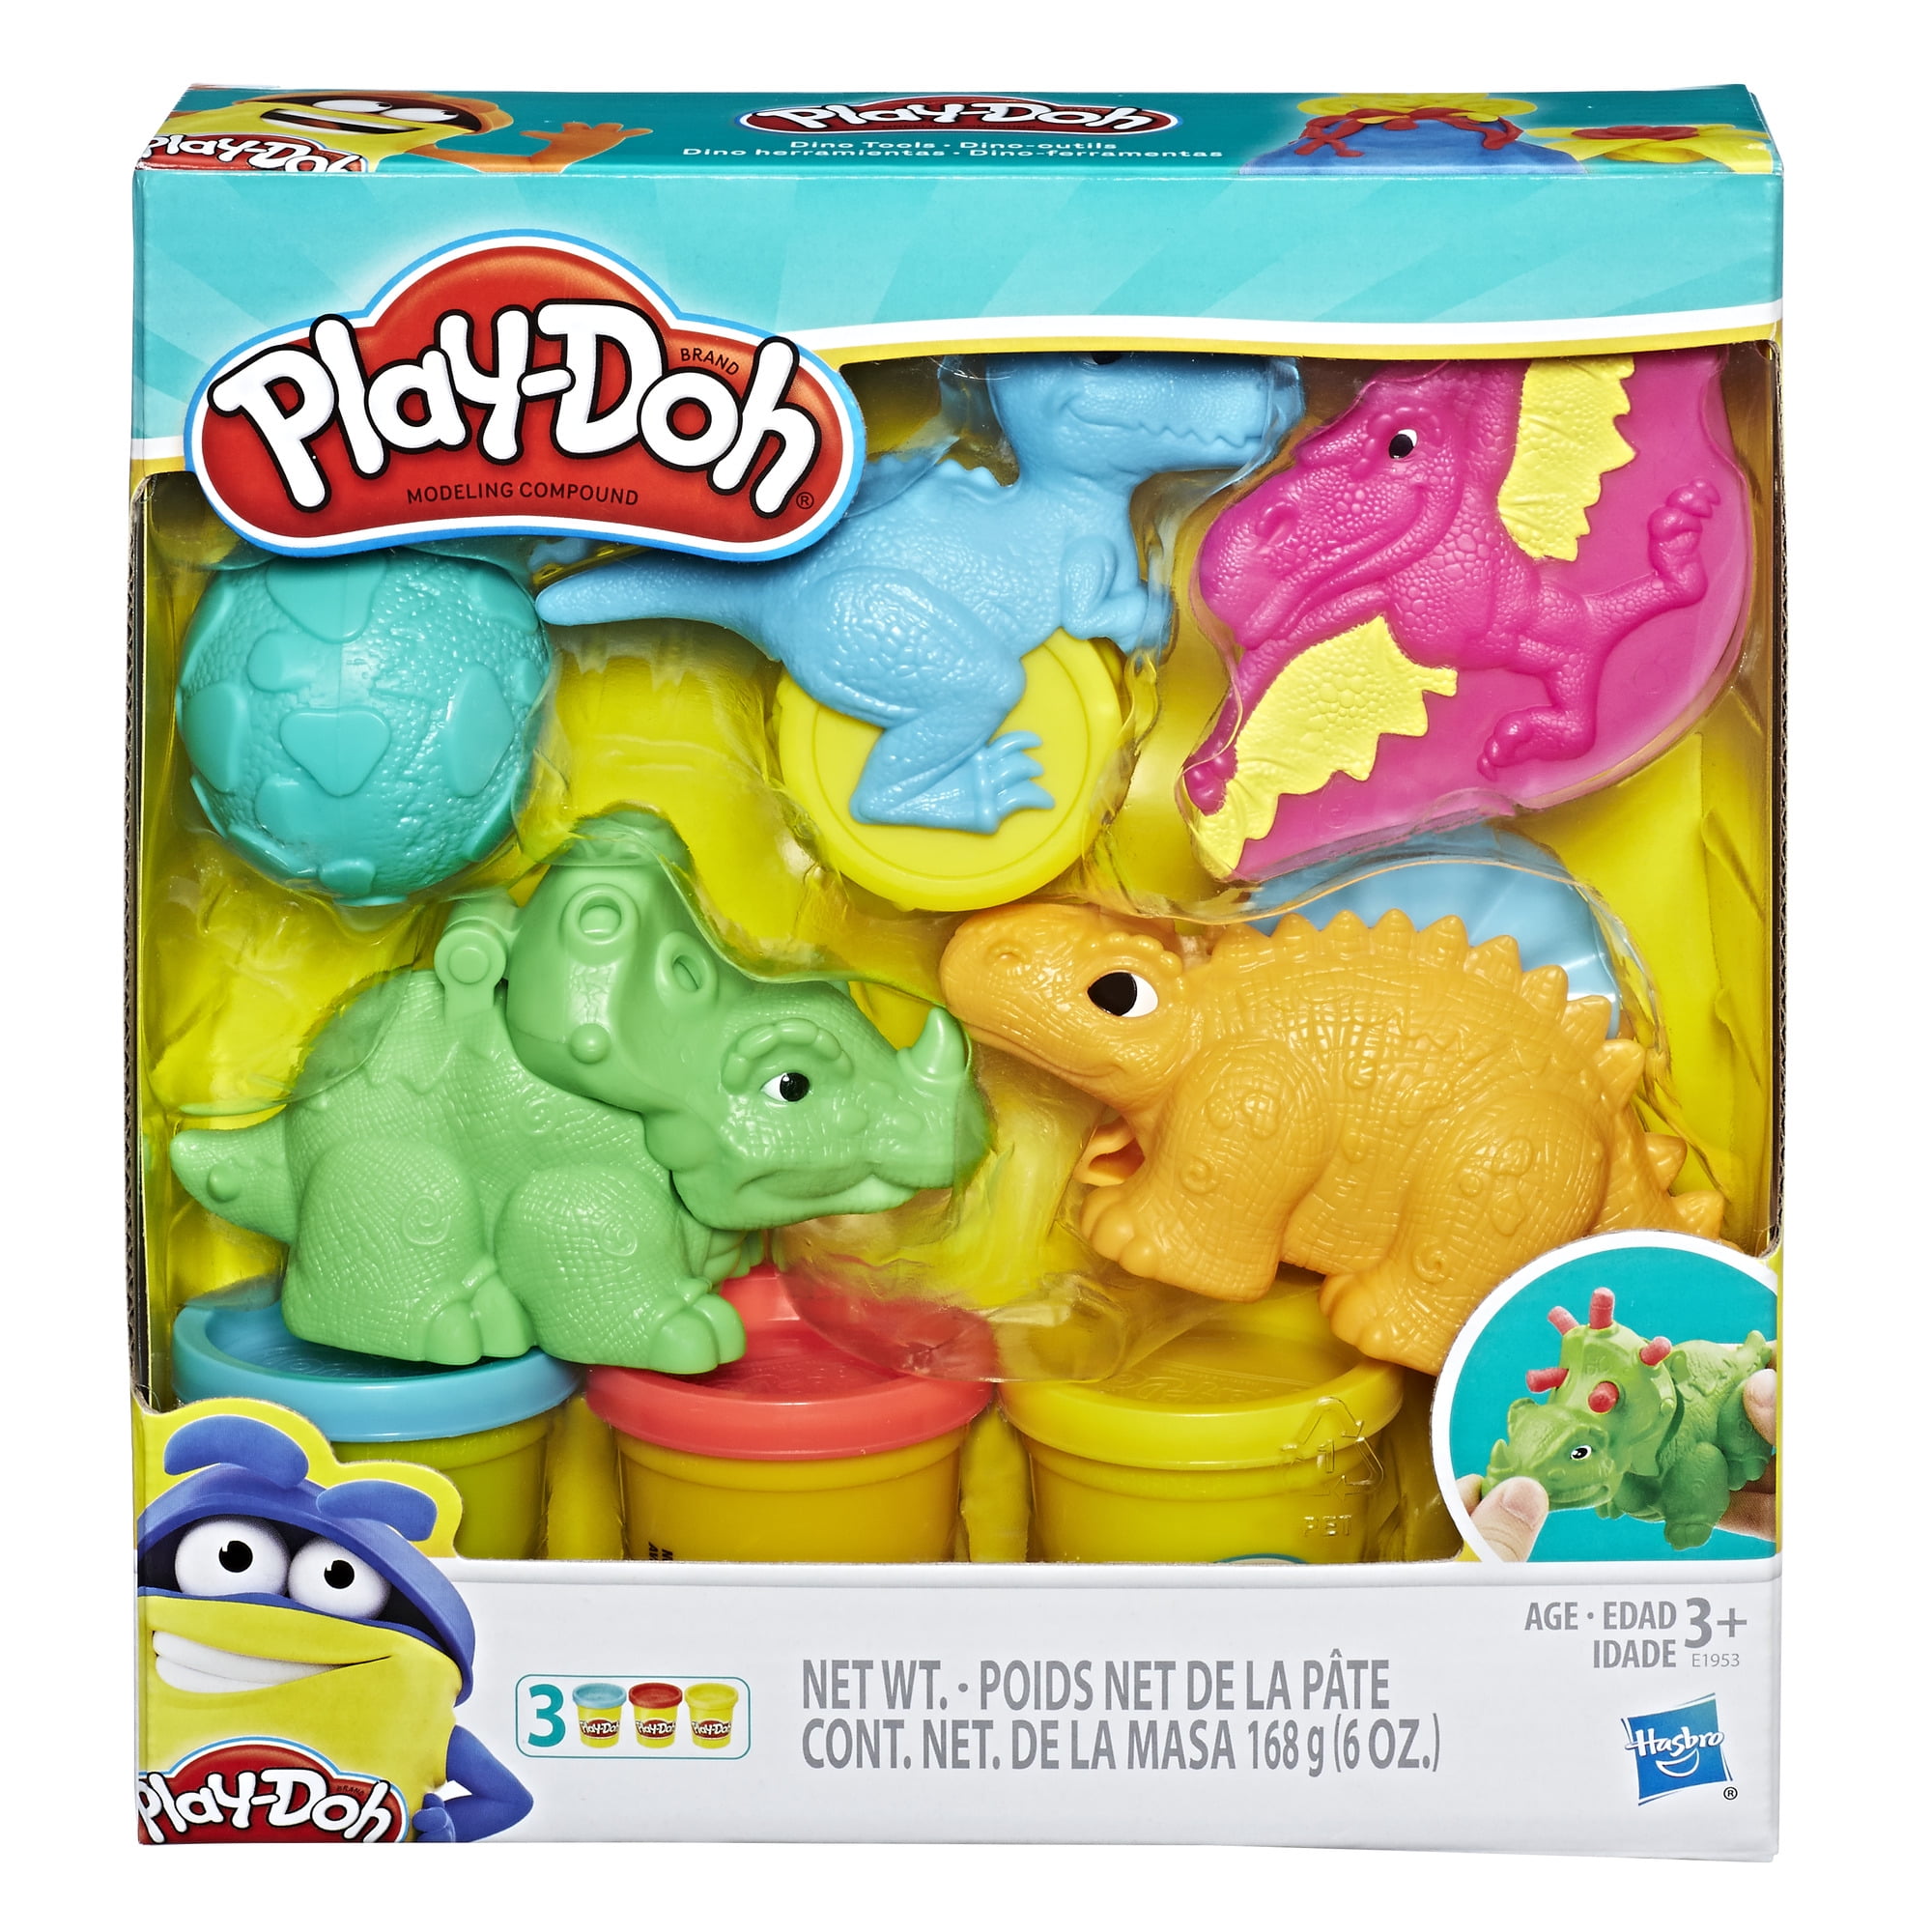 Play-Doh E5810AS0 Poop Troop Modeling Clay for sale online 